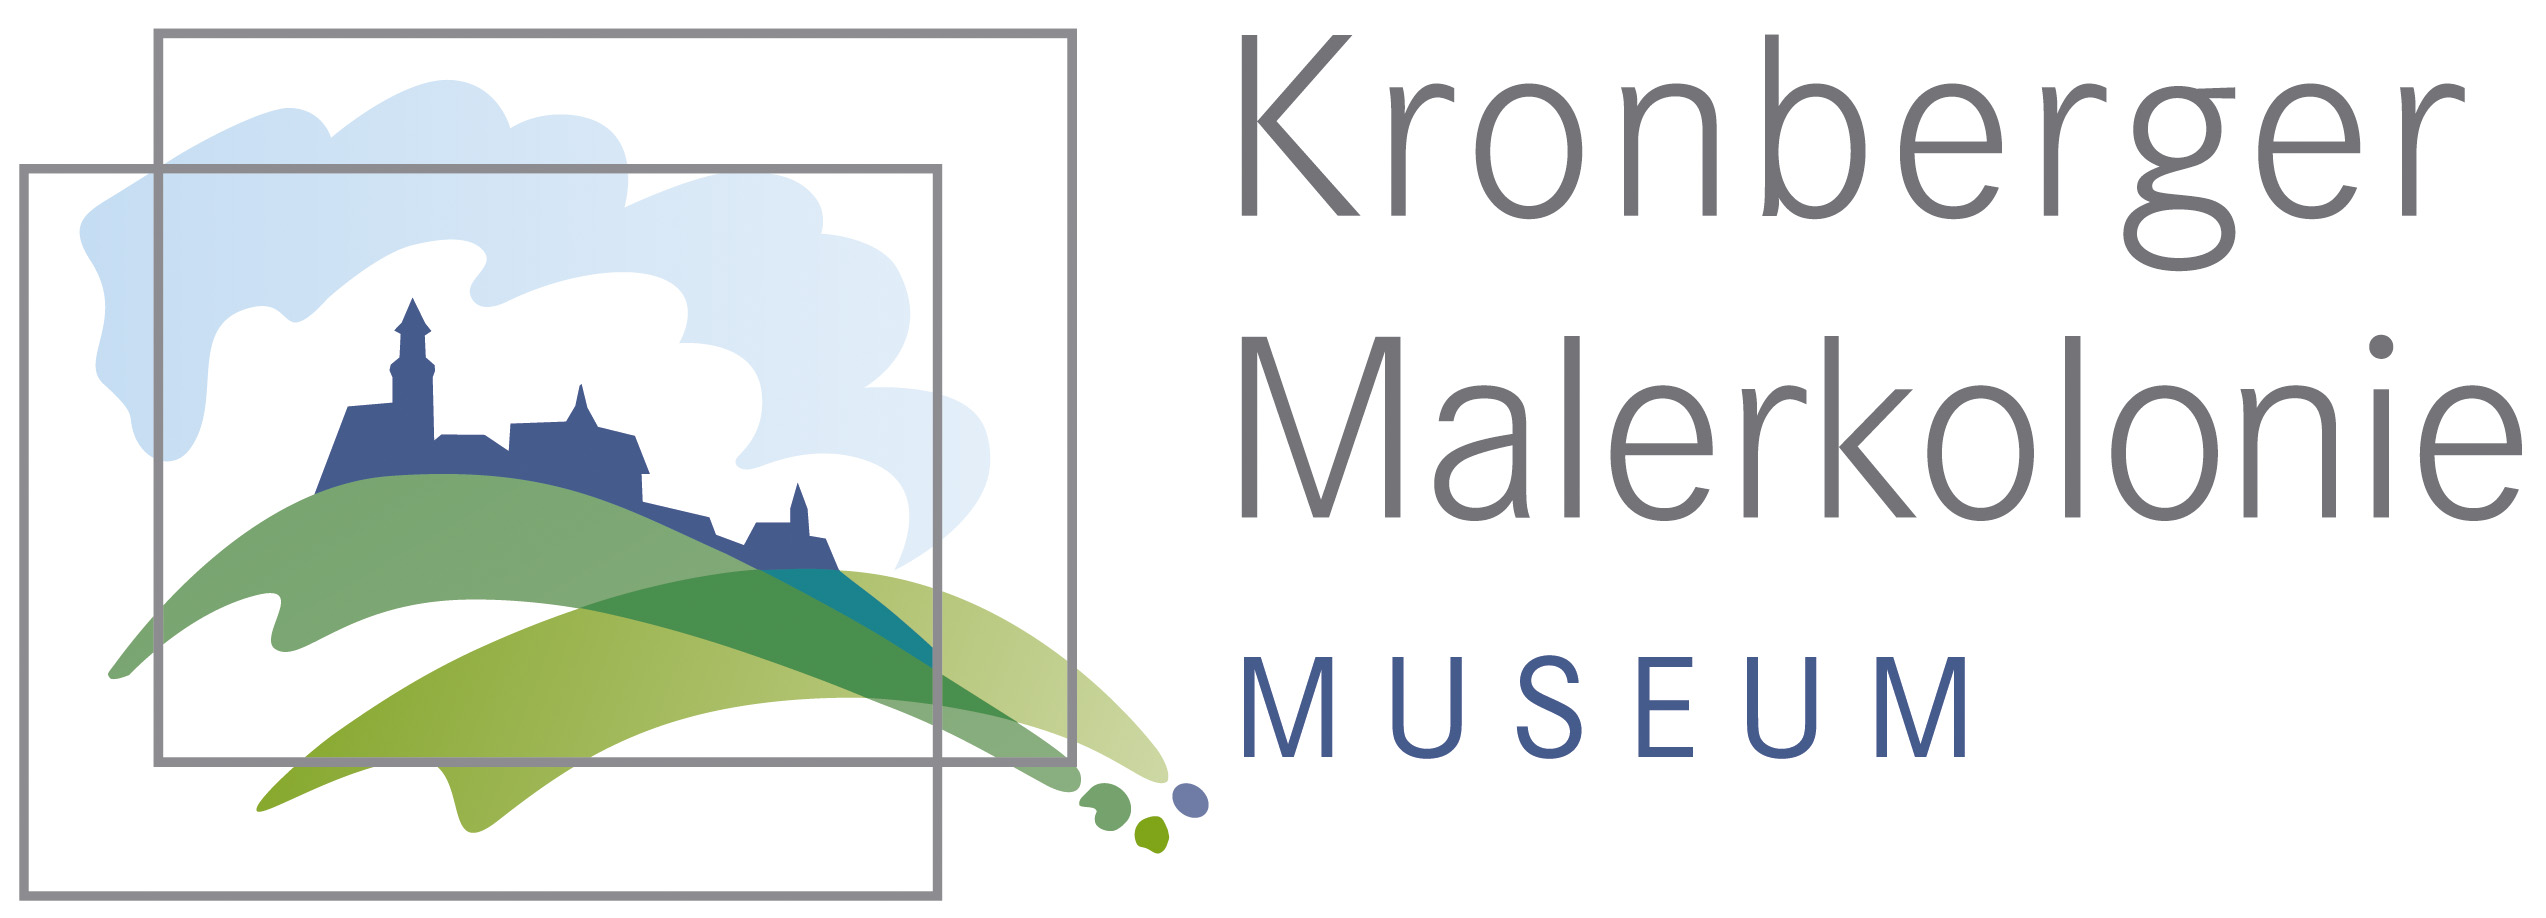 kronberger-malerkolonie_museum_4c-21cm_20140926_final